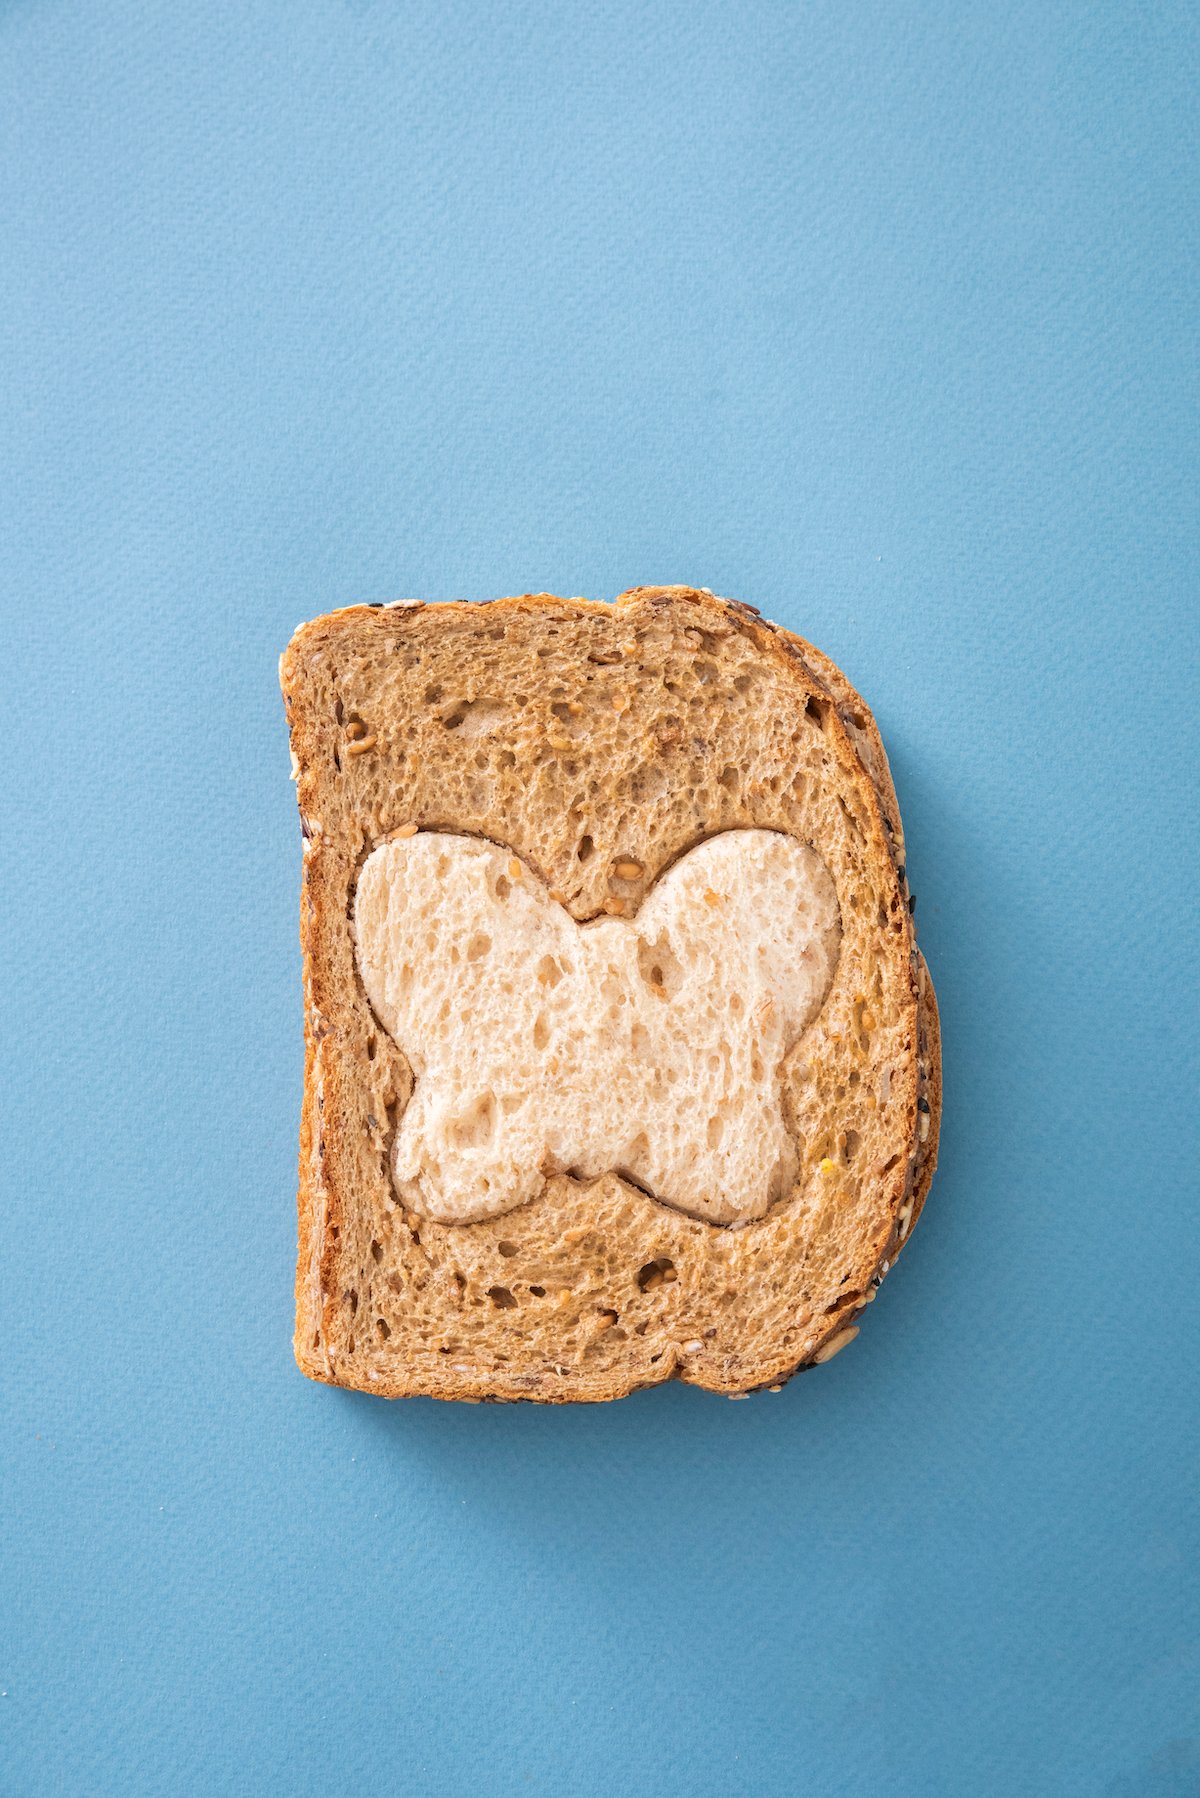 Two-tone sandwich with butterfly shape